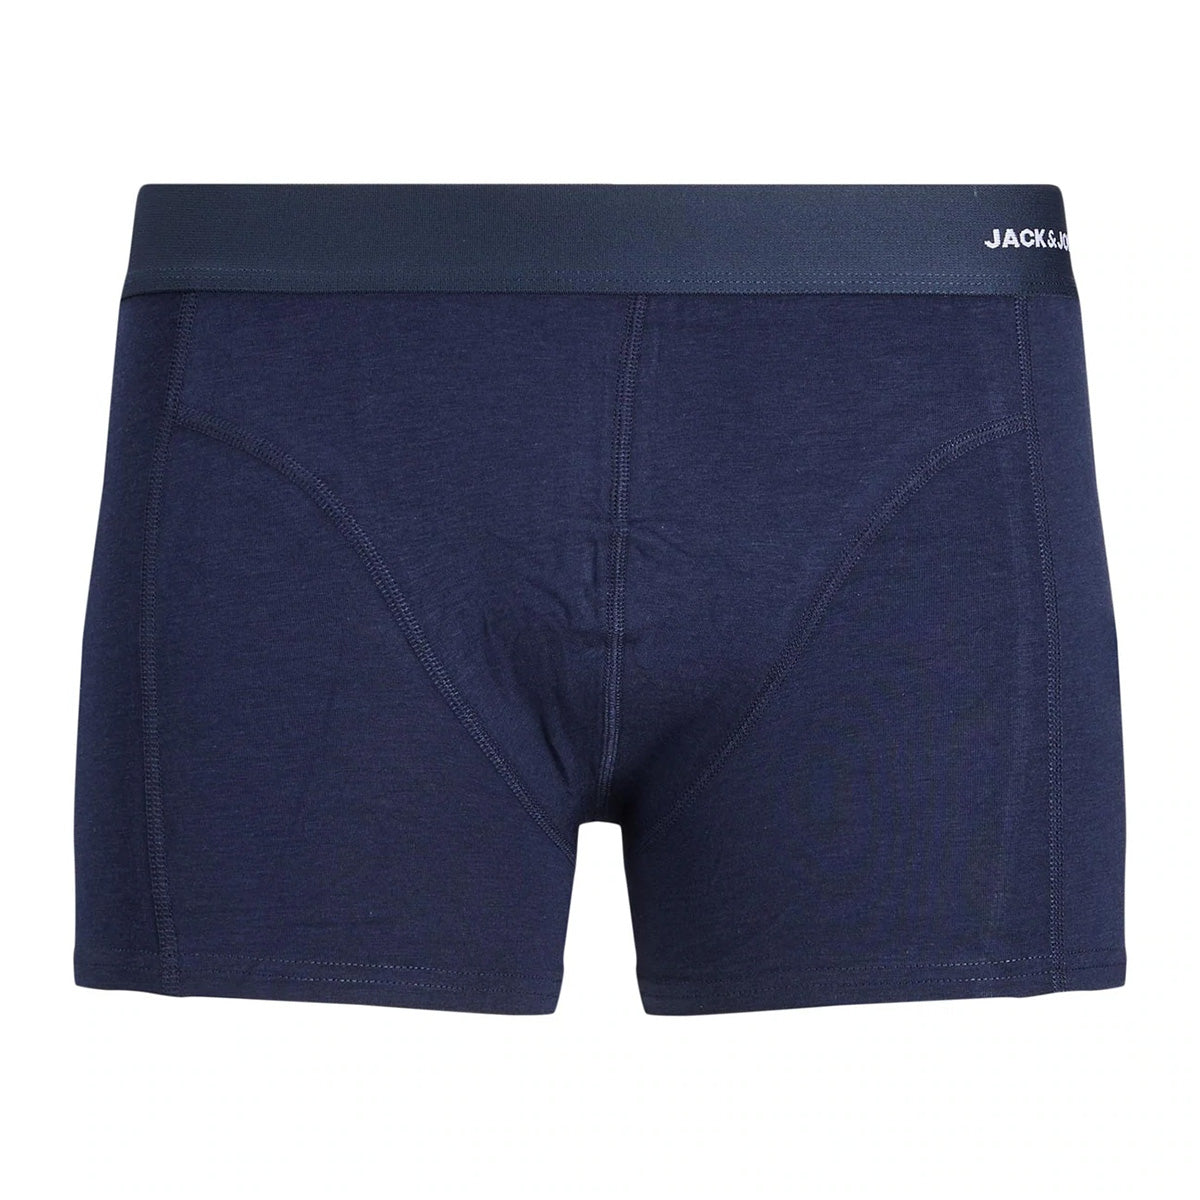 Boxer shorts Jack &amp; Jones color bamboo navy blue